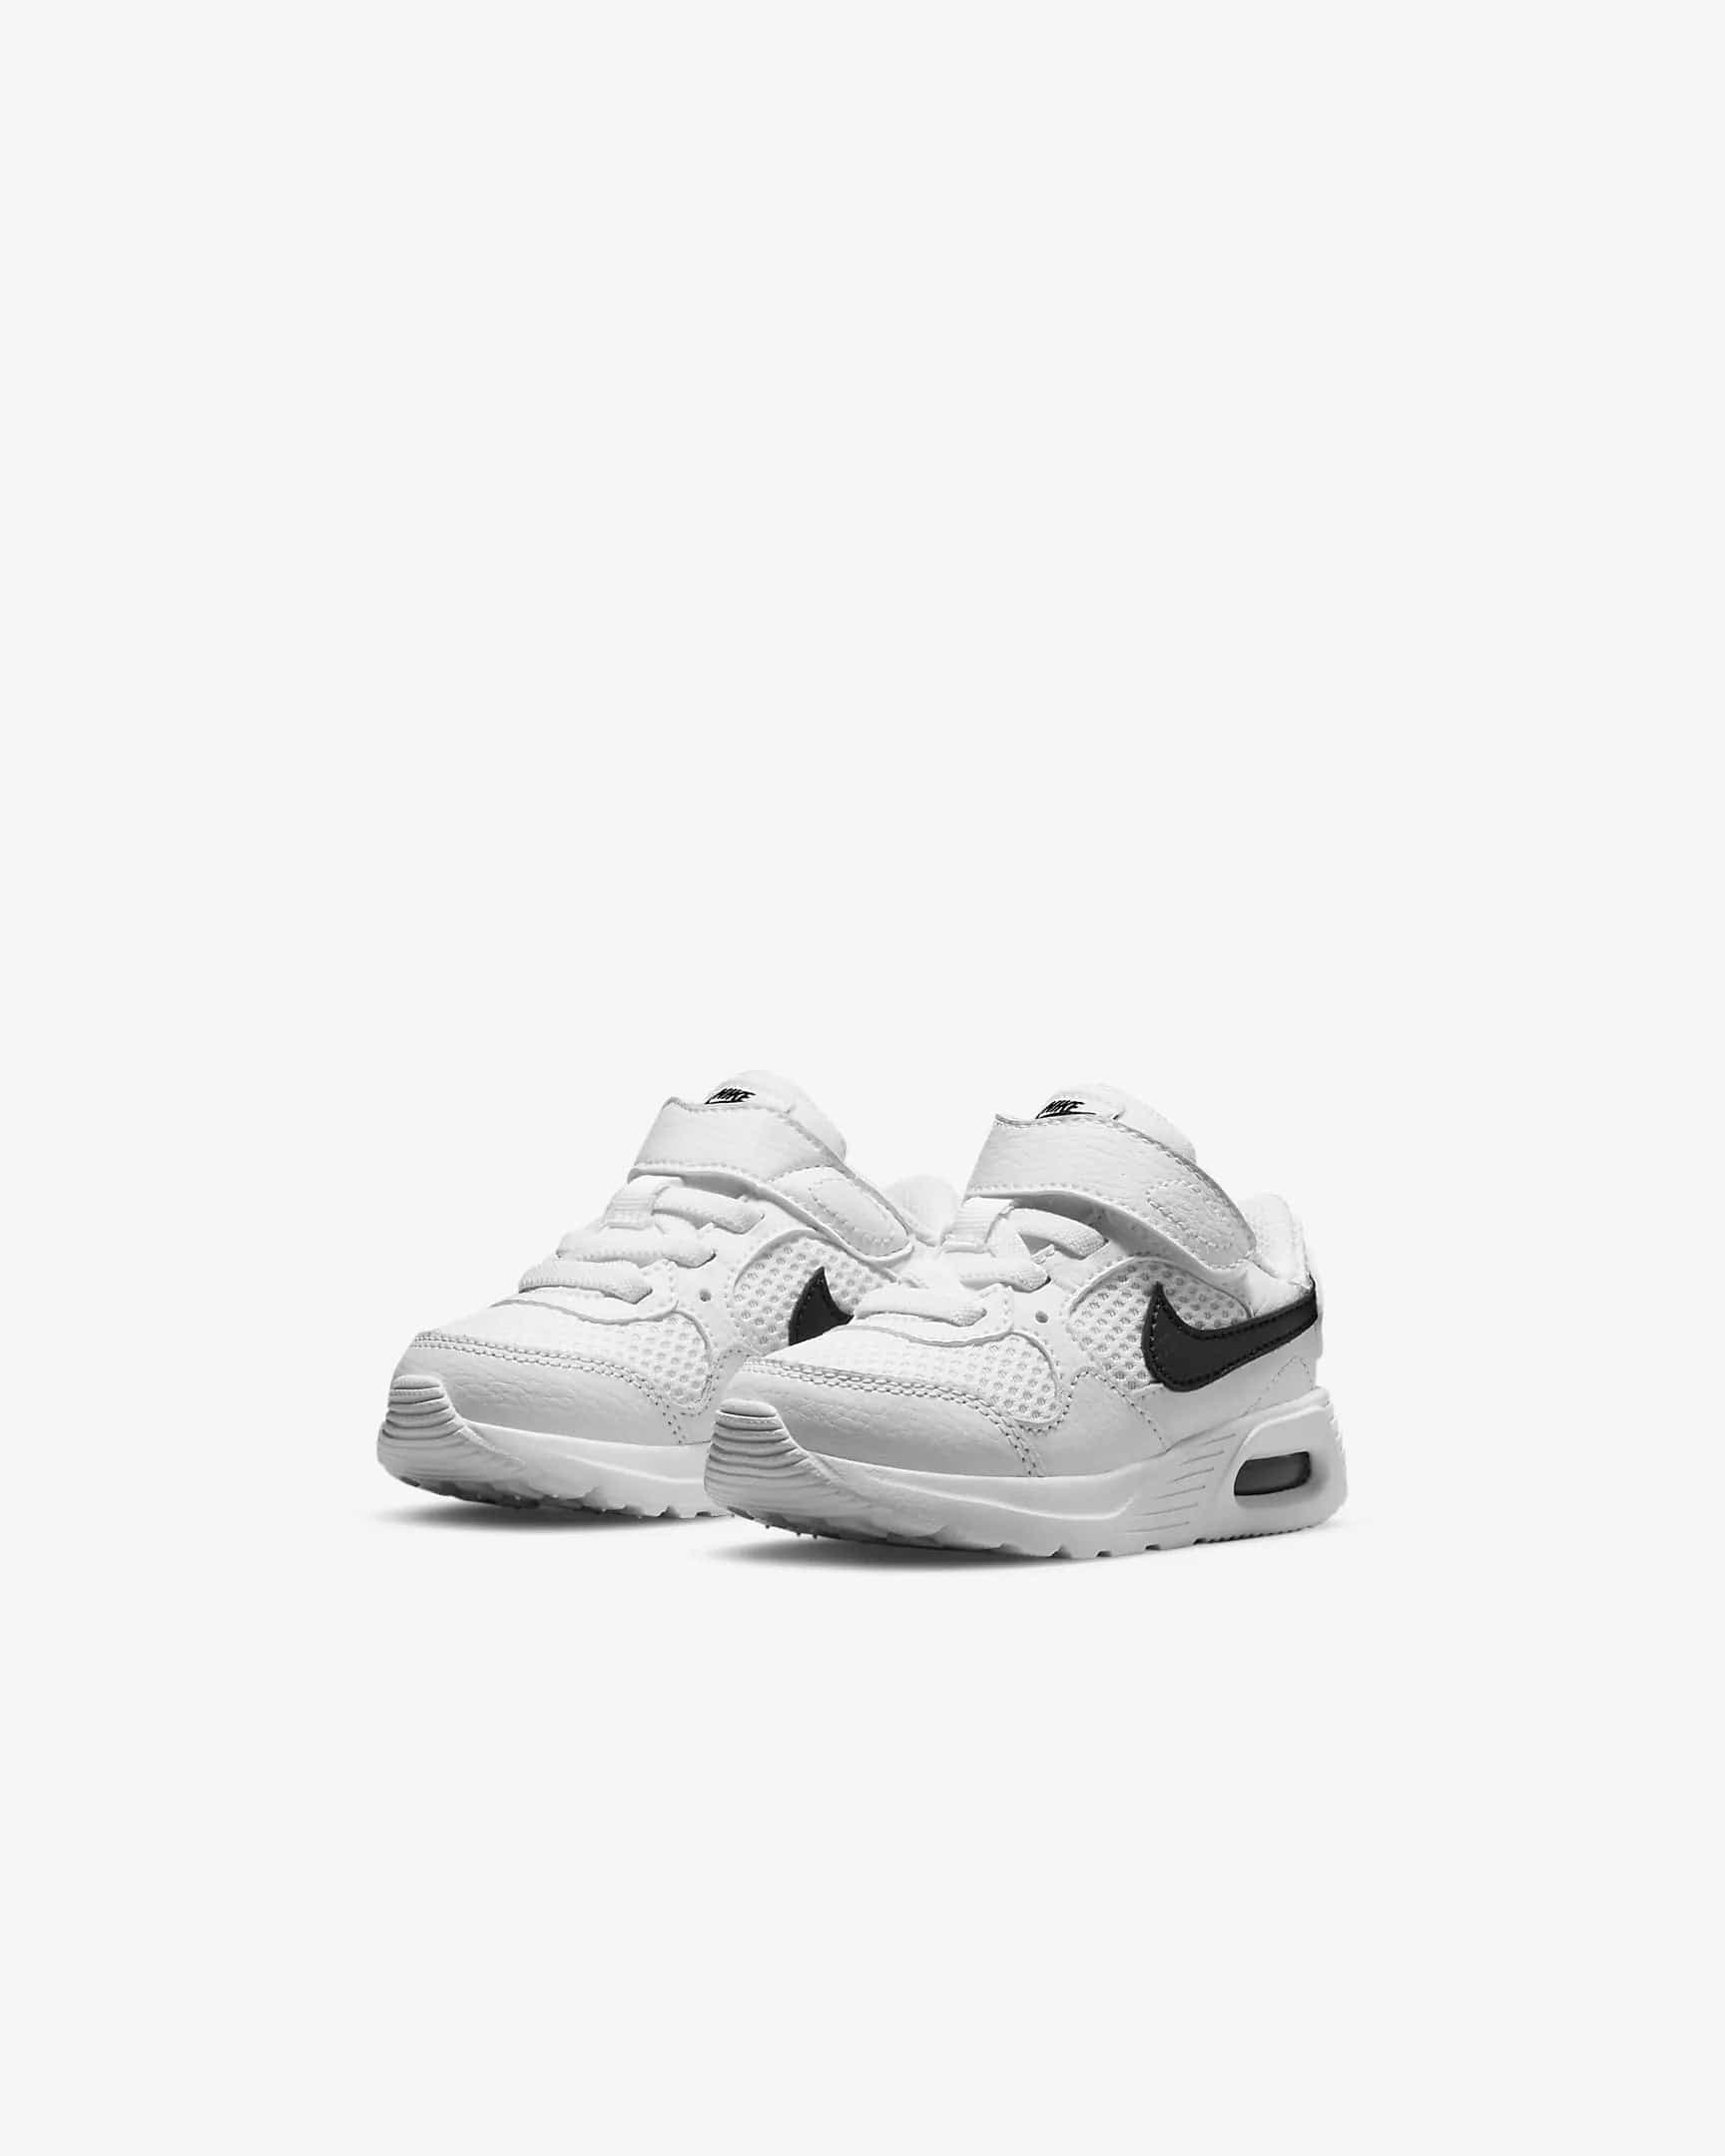 Nike NIKE INFANT'S Air Max SC WHITE/BLACK Shoes - INSPORT